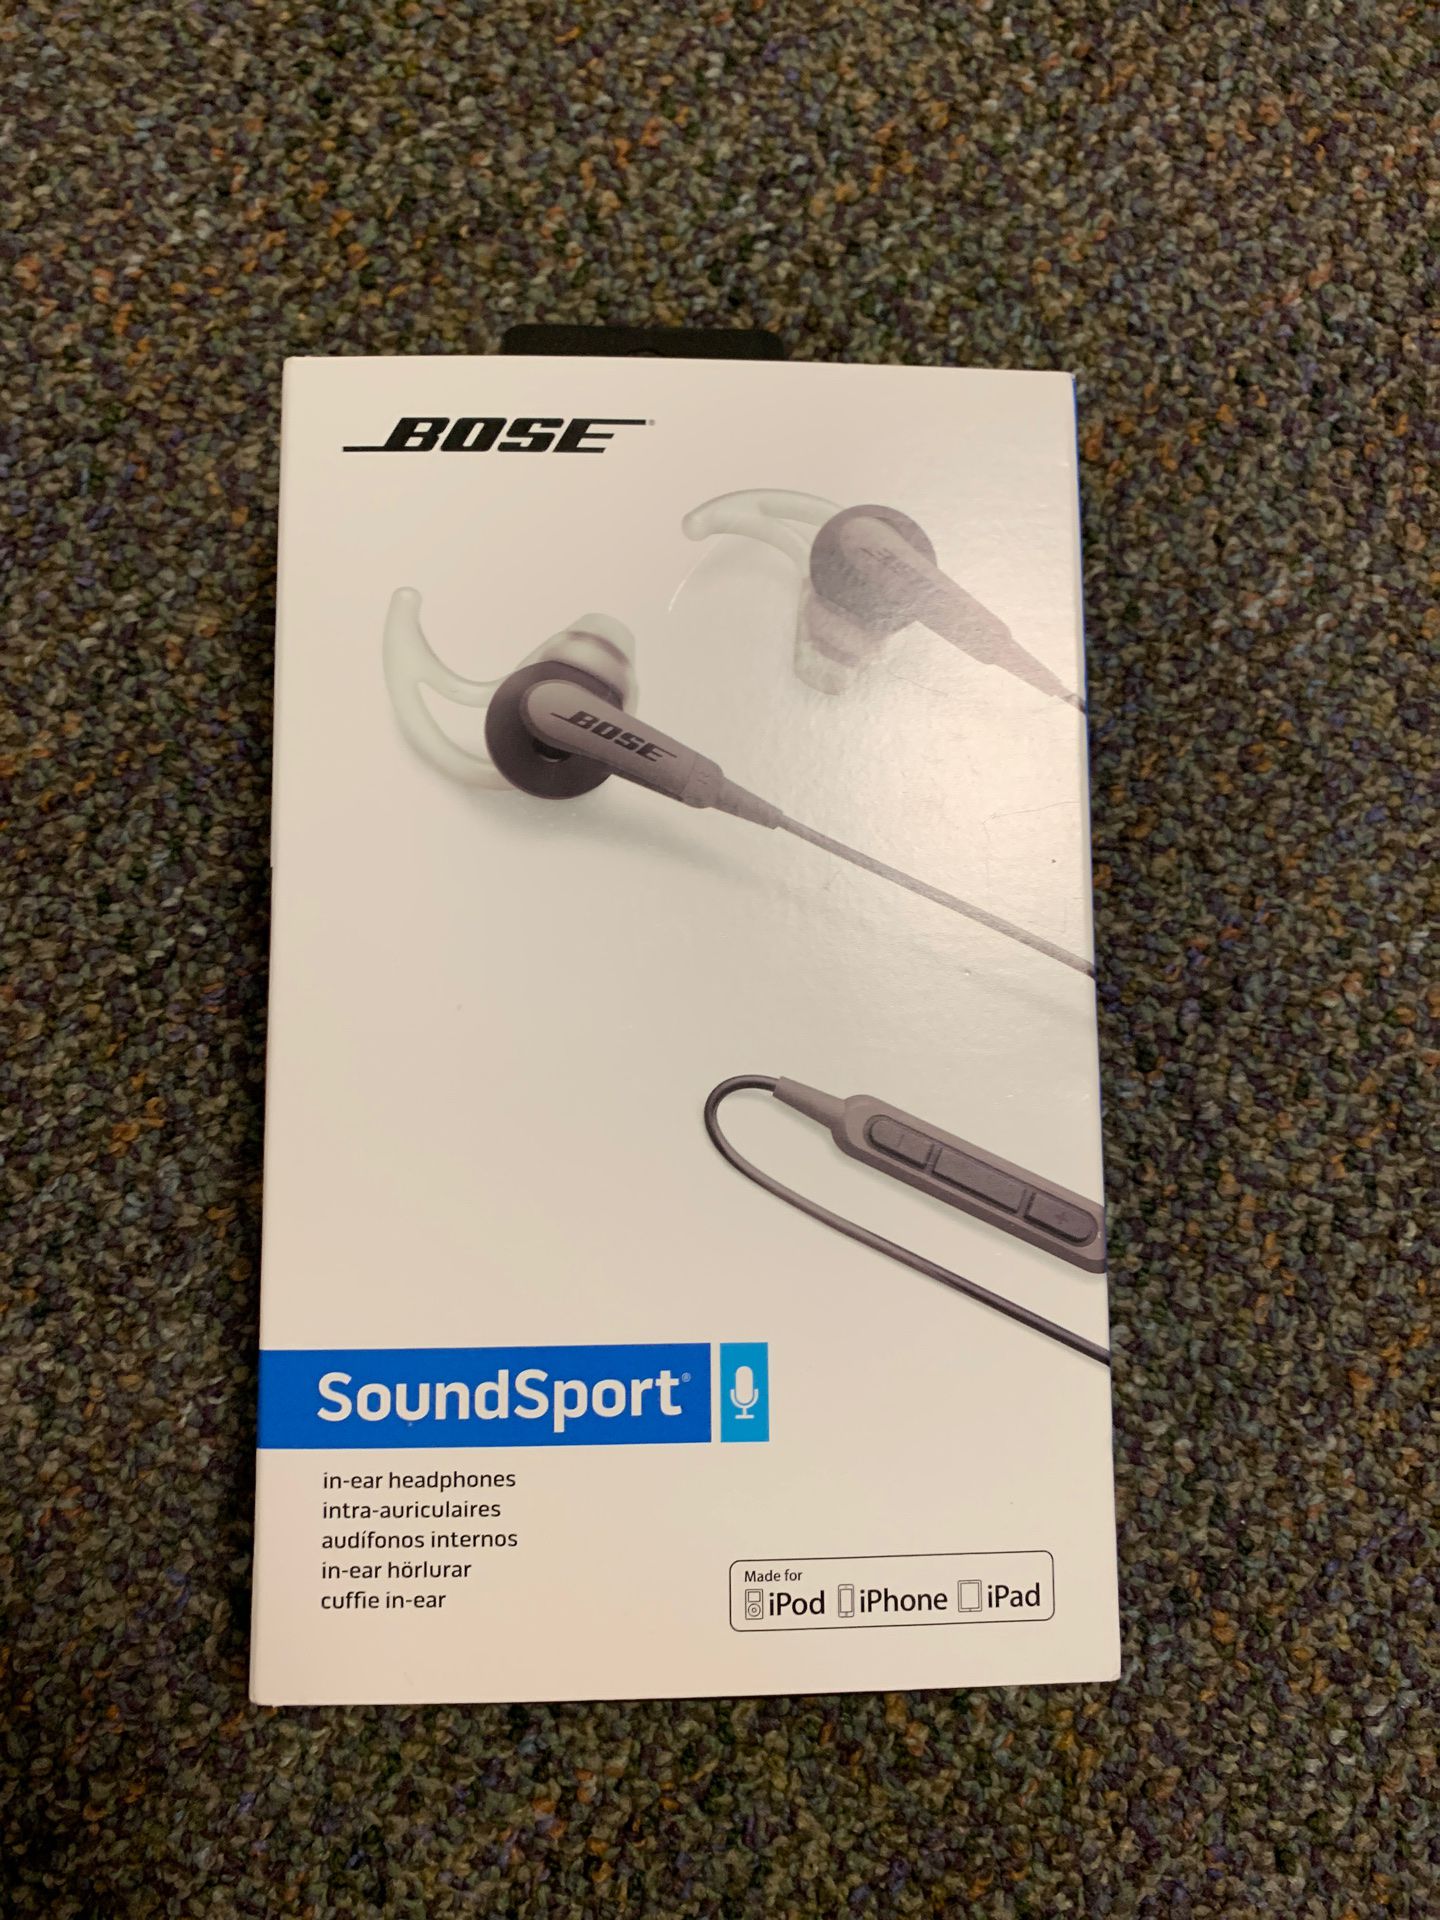 Bose Sounsport headphones with phone mic